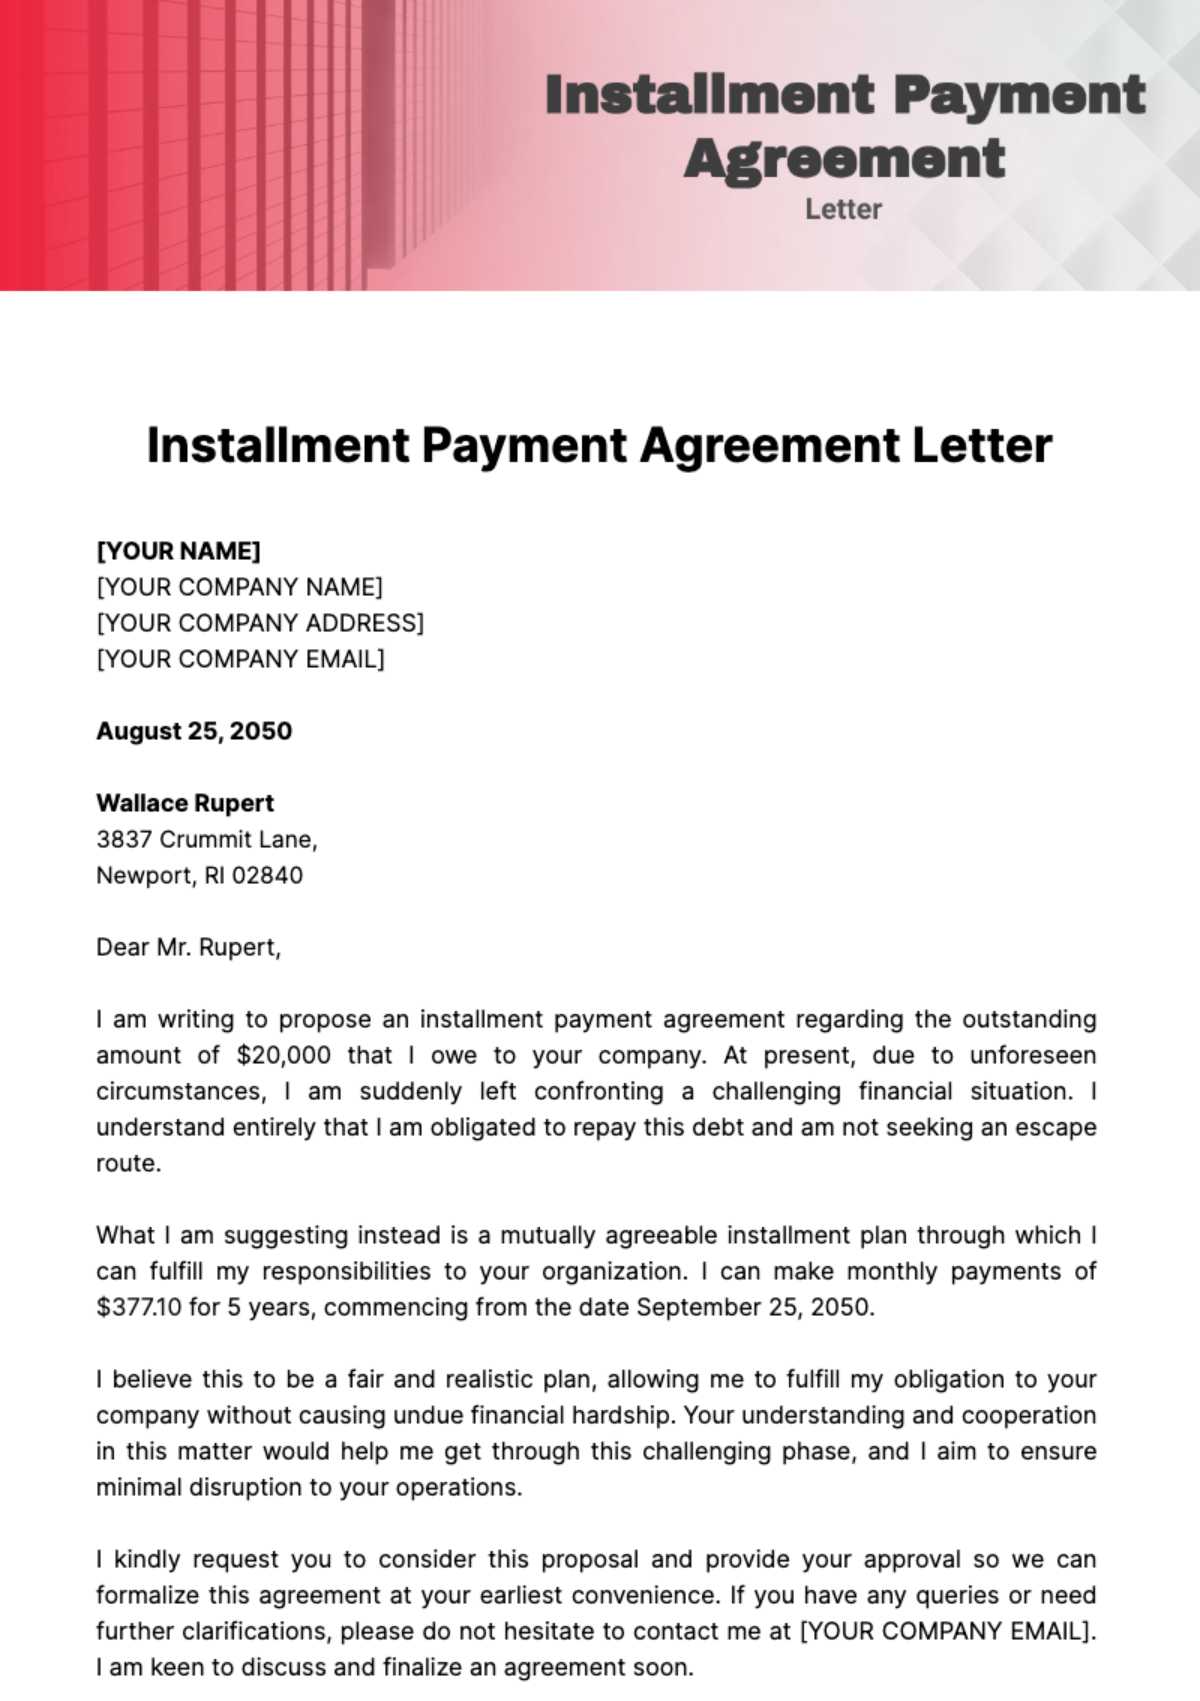 Installment Payment Agreement Letter Template